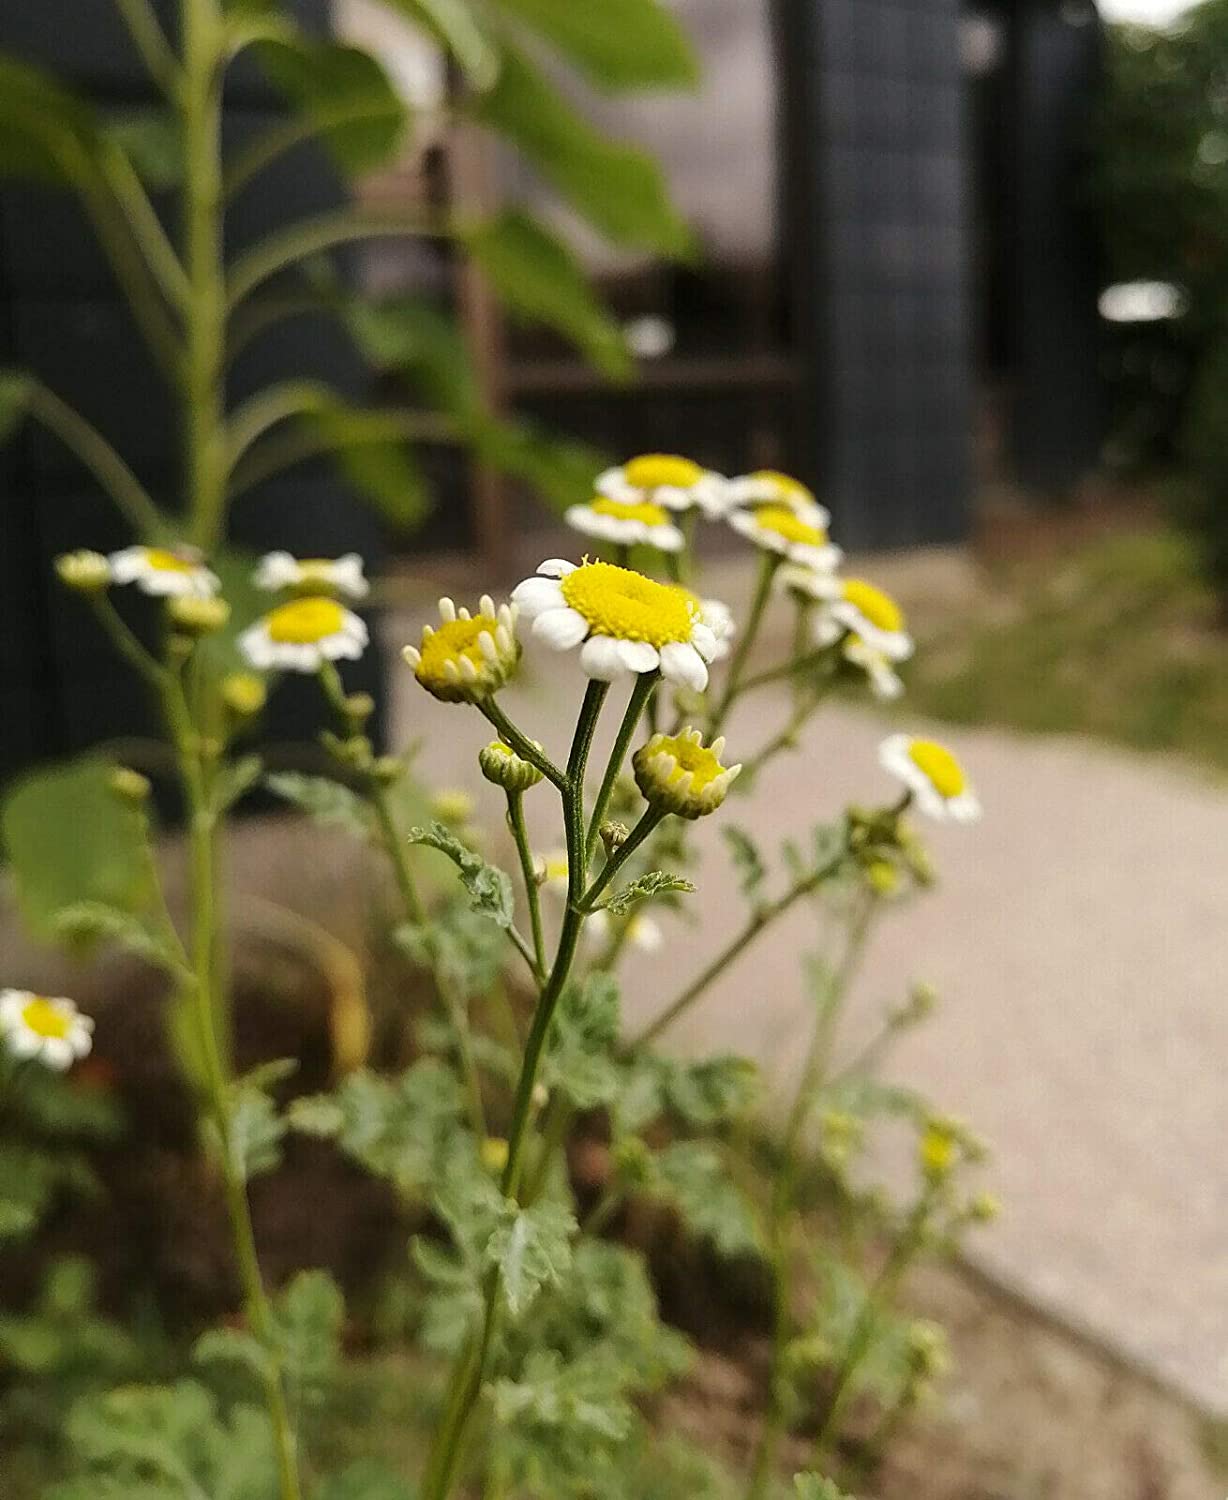 Hundredfold Organic Feverfew 100 Seeds - Chrysanthemum Tanacetum parthenium, Traditional Medical Herb, Daisy-Like Flowers